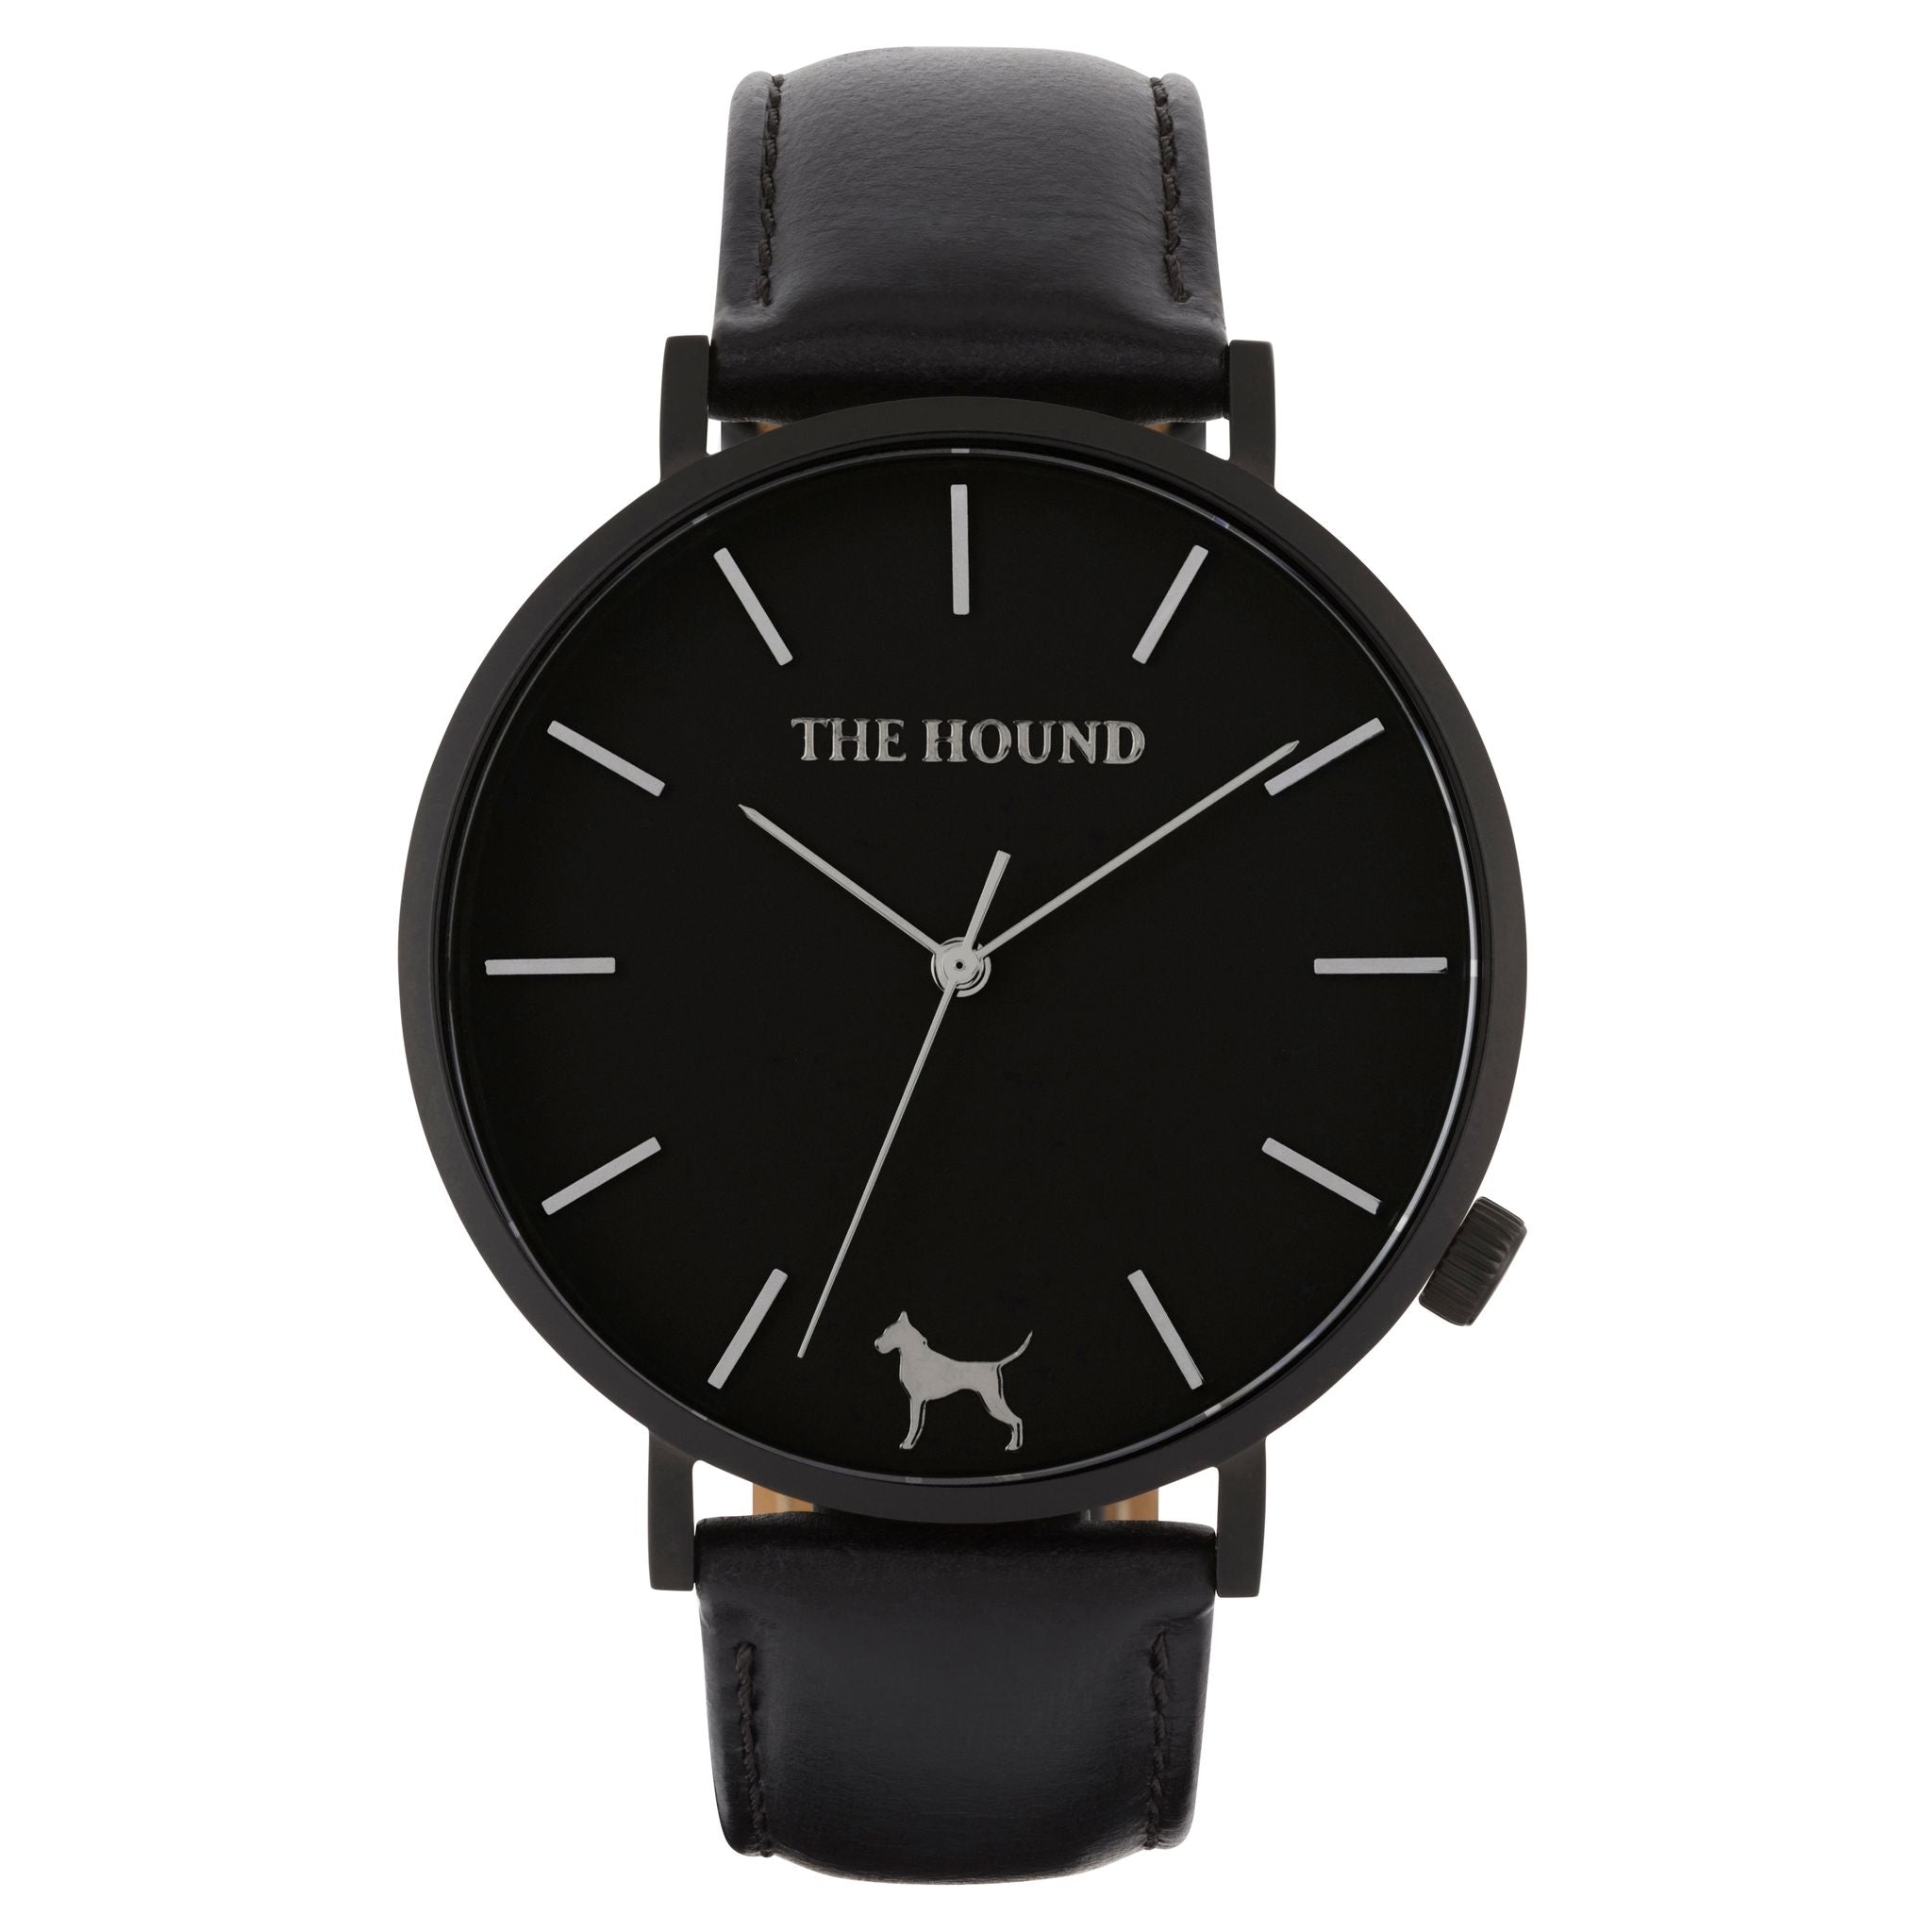 Extra Watch - Matte Black & Black Leather